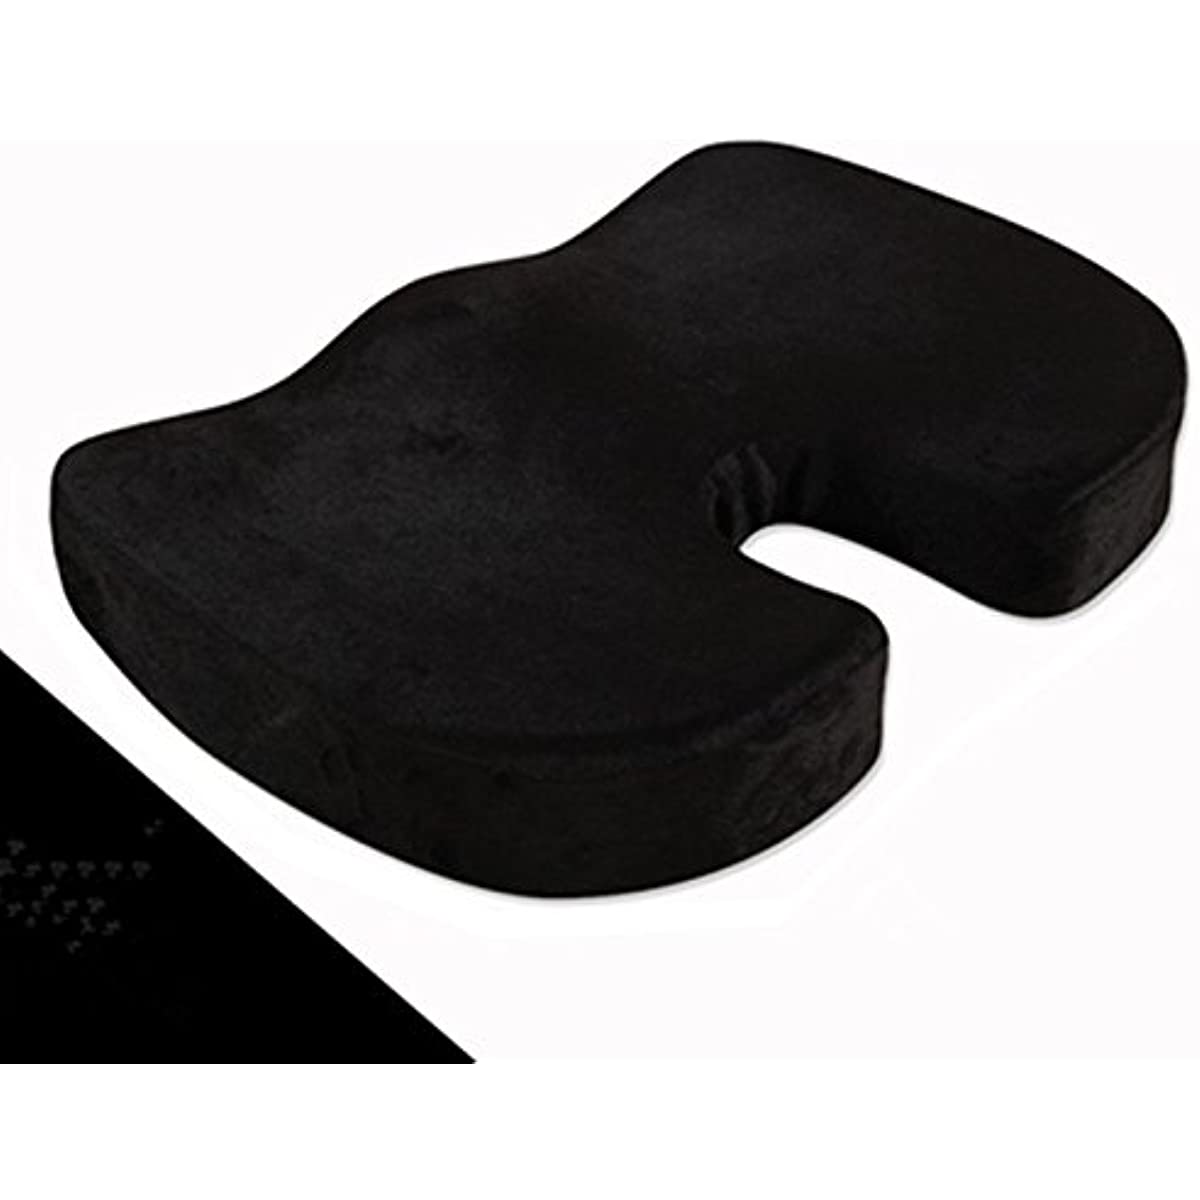 Orthopedic Memory Foam Compact Seat Cushion for Tailbone Pain Relief -  Washable